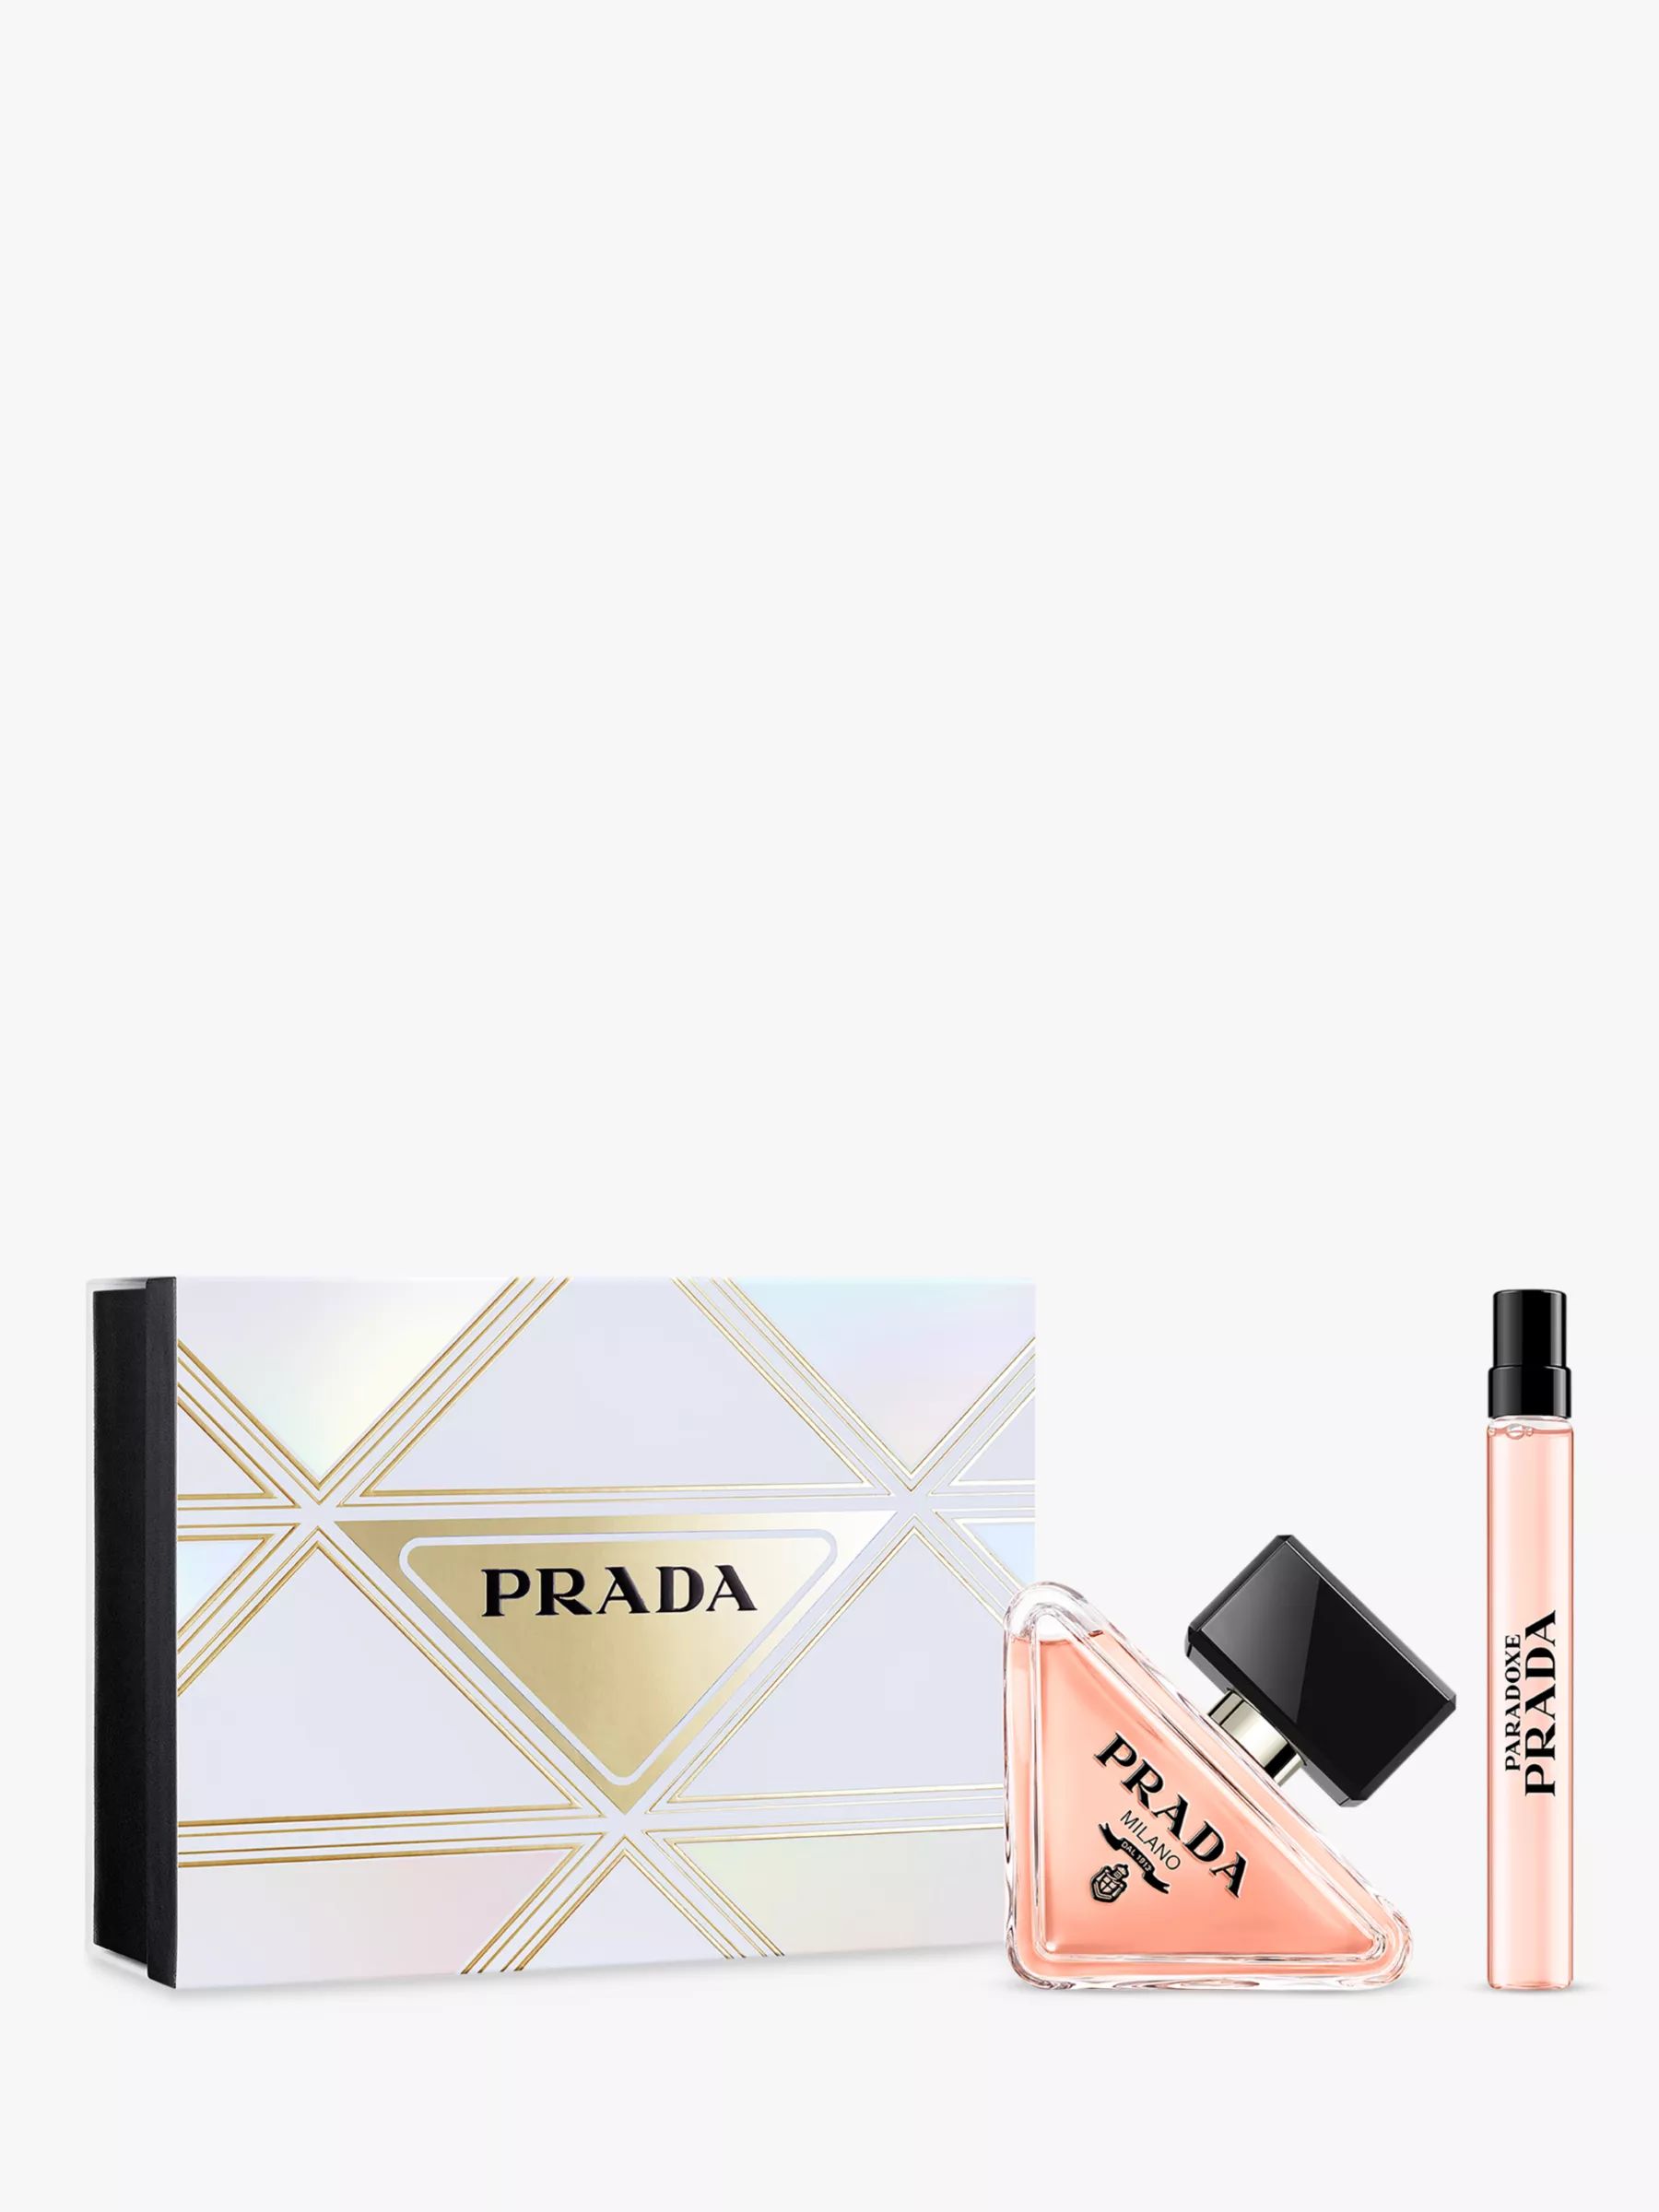 Prada Paradoxe Eau de Parfum 50ml Fragrance Gift Set | John Lewis (UK)